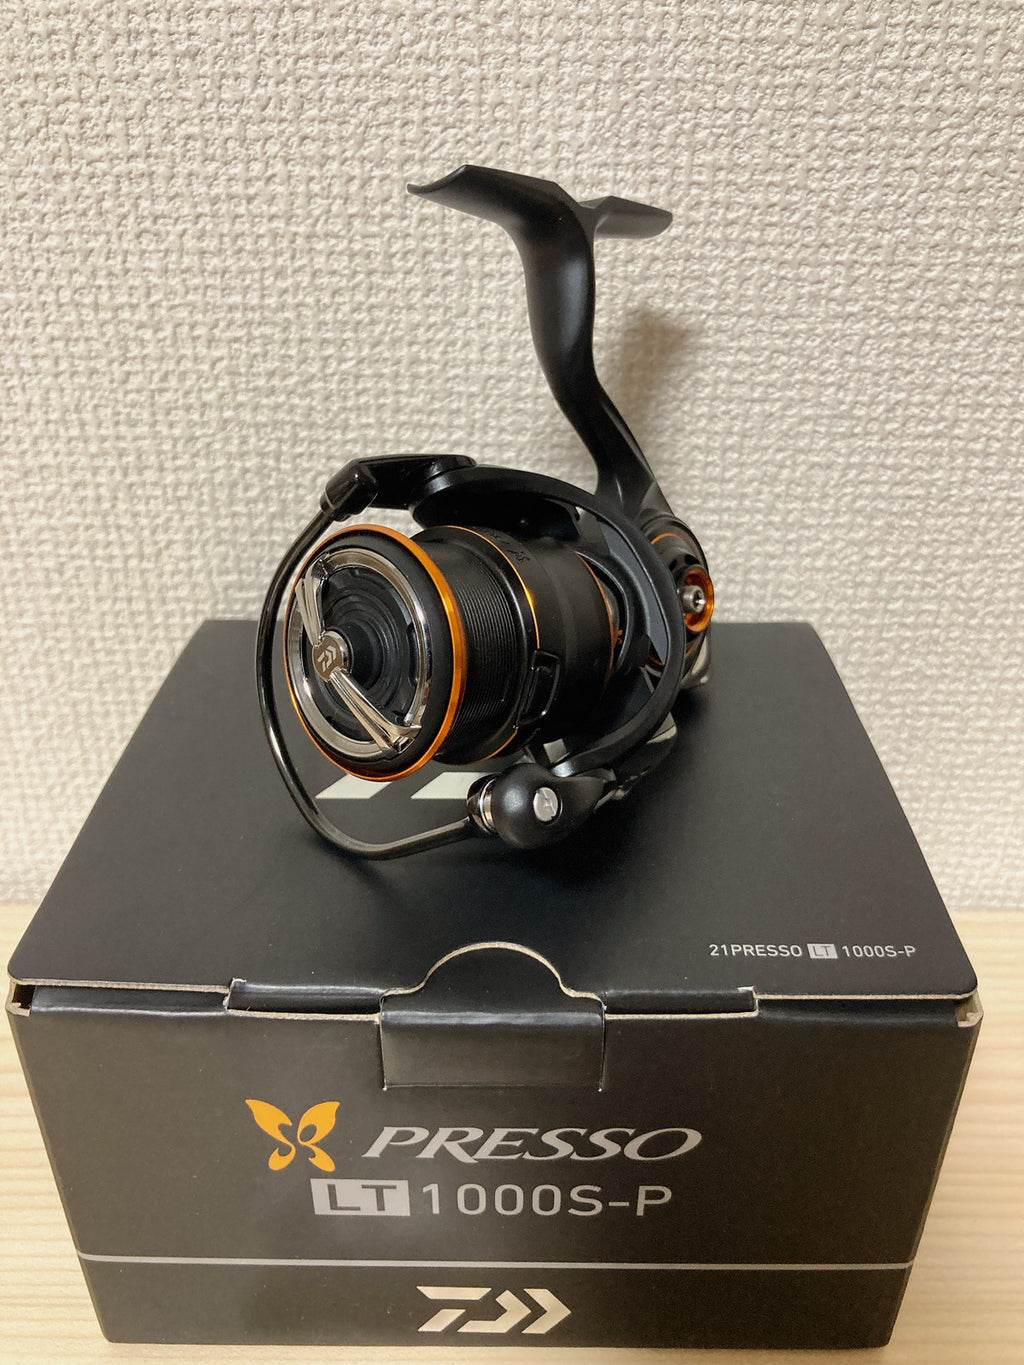 Daiwa Spinning Reel 21 PRESSO LT1000S-P Gear Ratio 4.9:1 